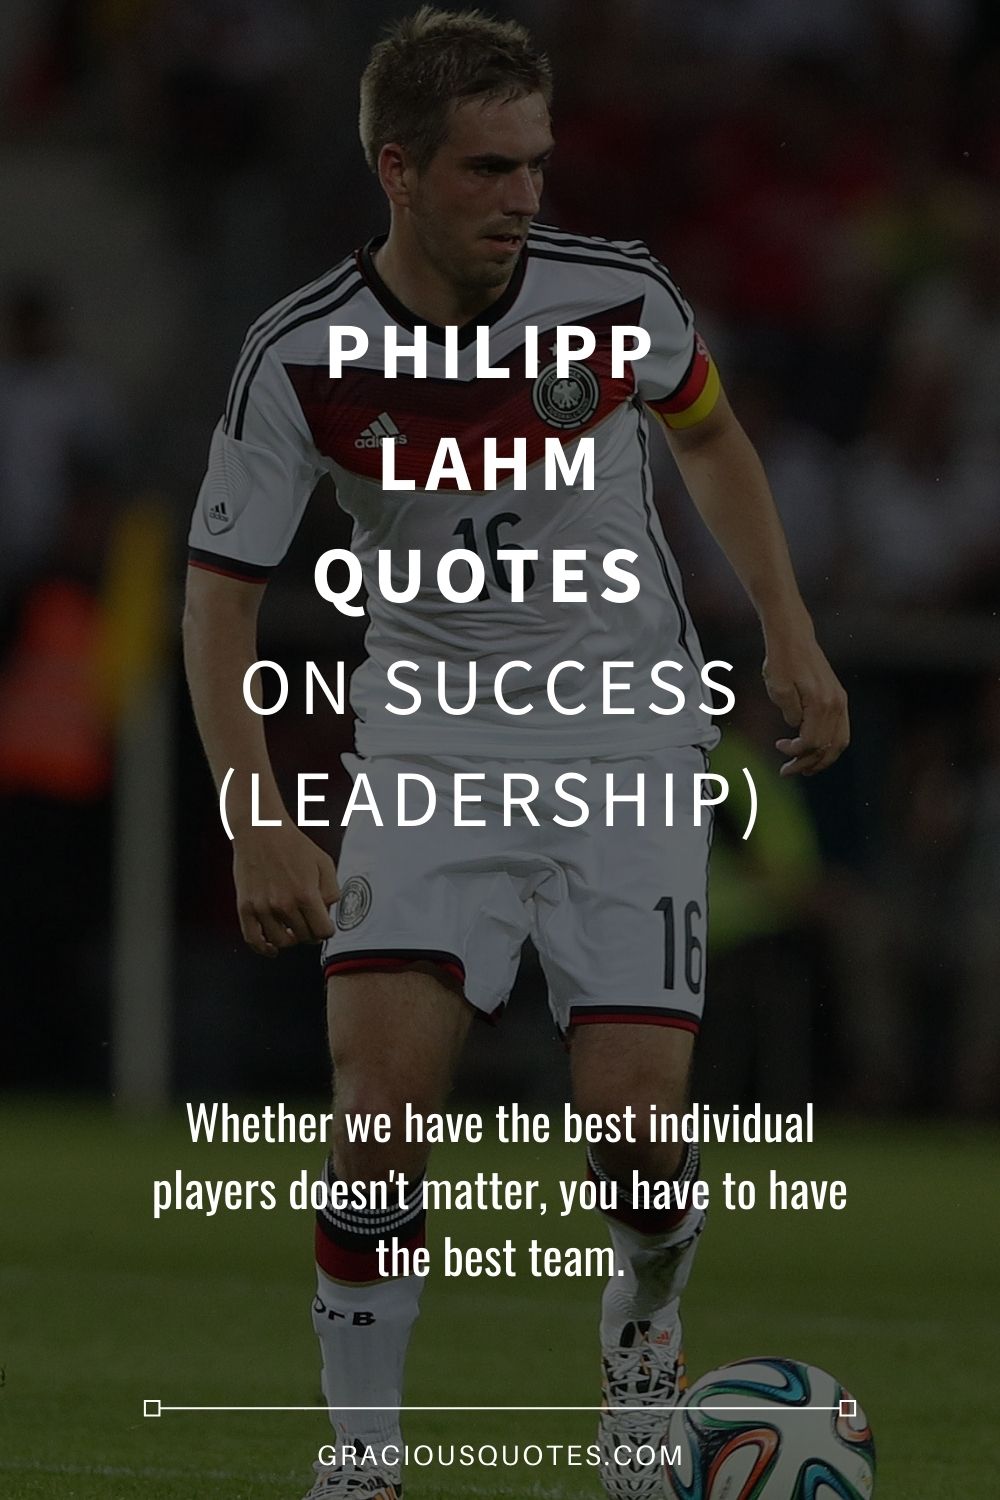 Philipp Lahm Quotes on Success (LEADERSHIP) - Gracious Quotes